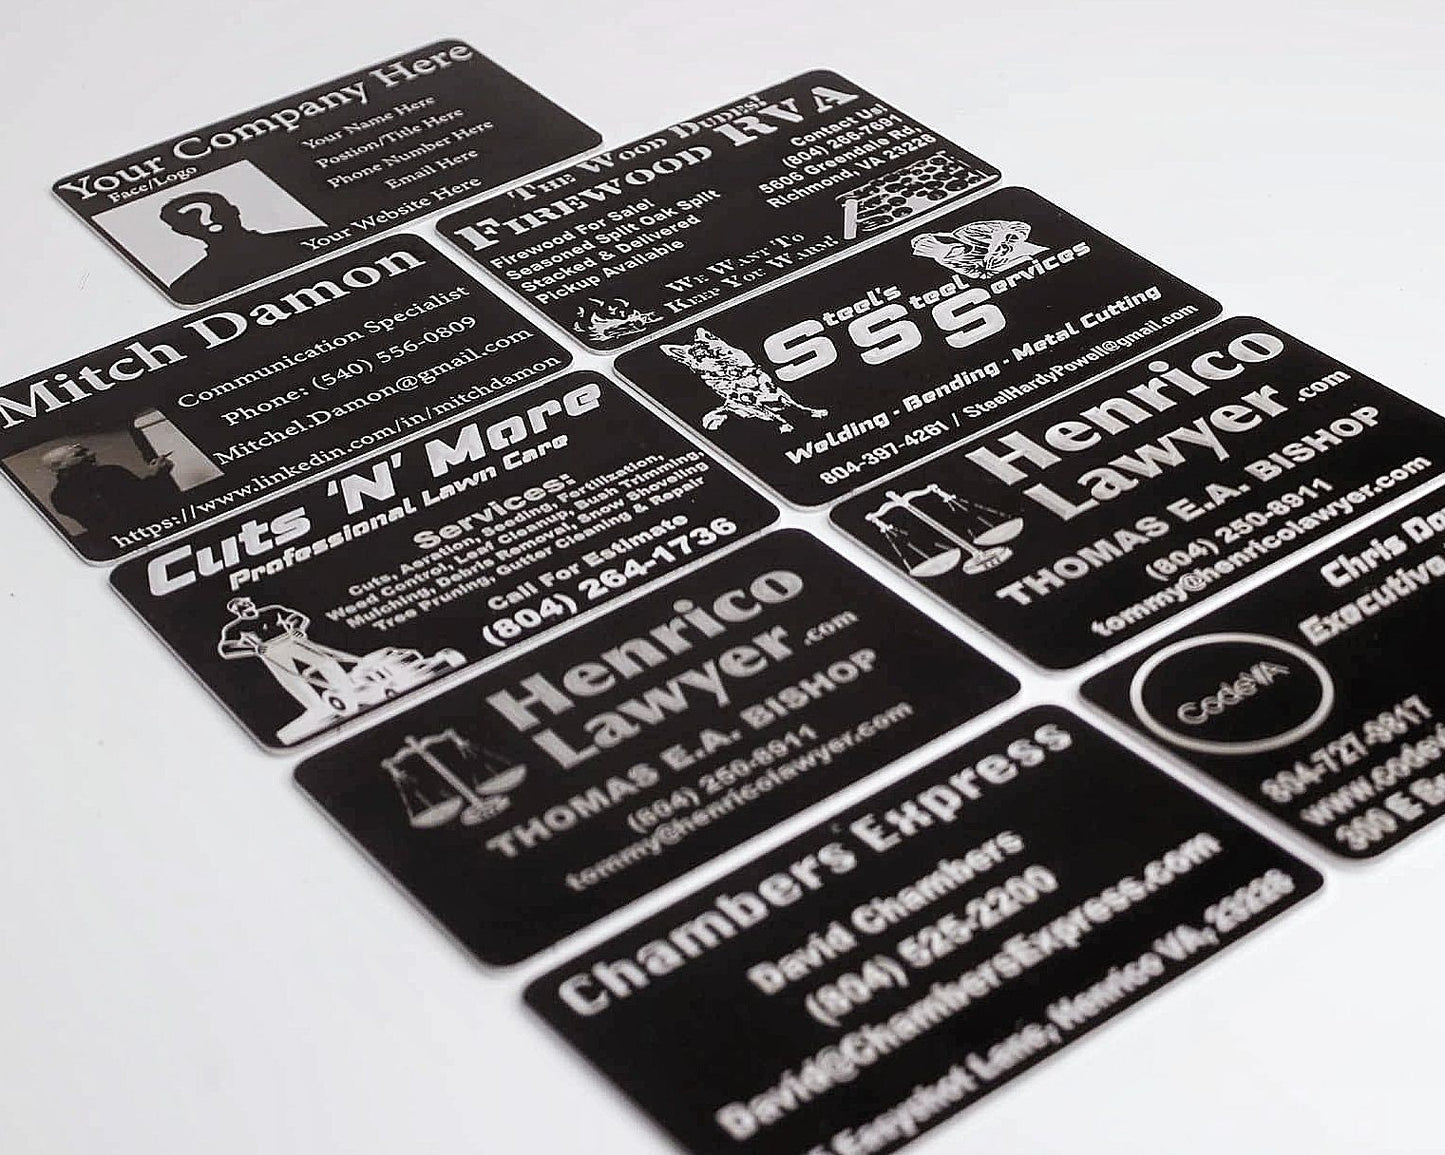 Laser Etched Black Anodized Aluminum Business Cards 50 Pack - BULK DISCOUNT SAVE $18